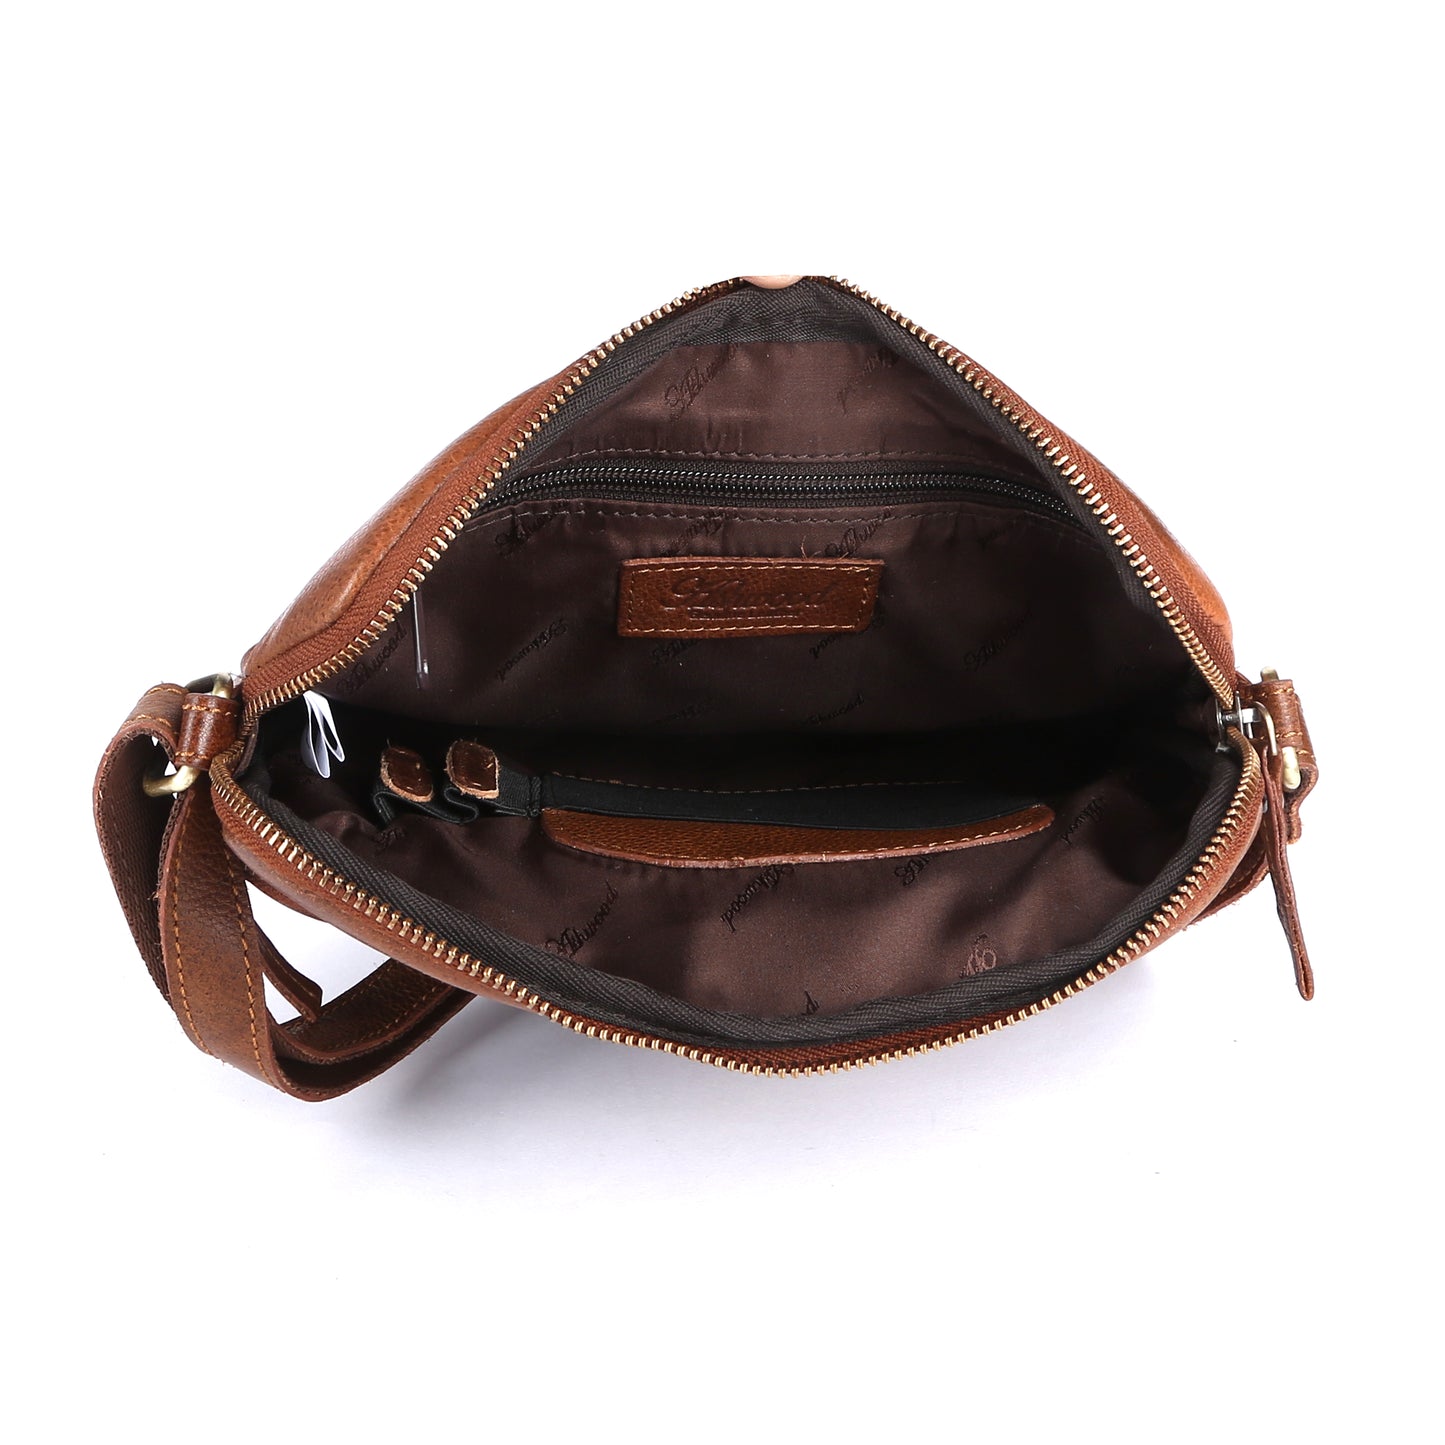 Ashwood Leather M-52 Cognac Tan Body Bag